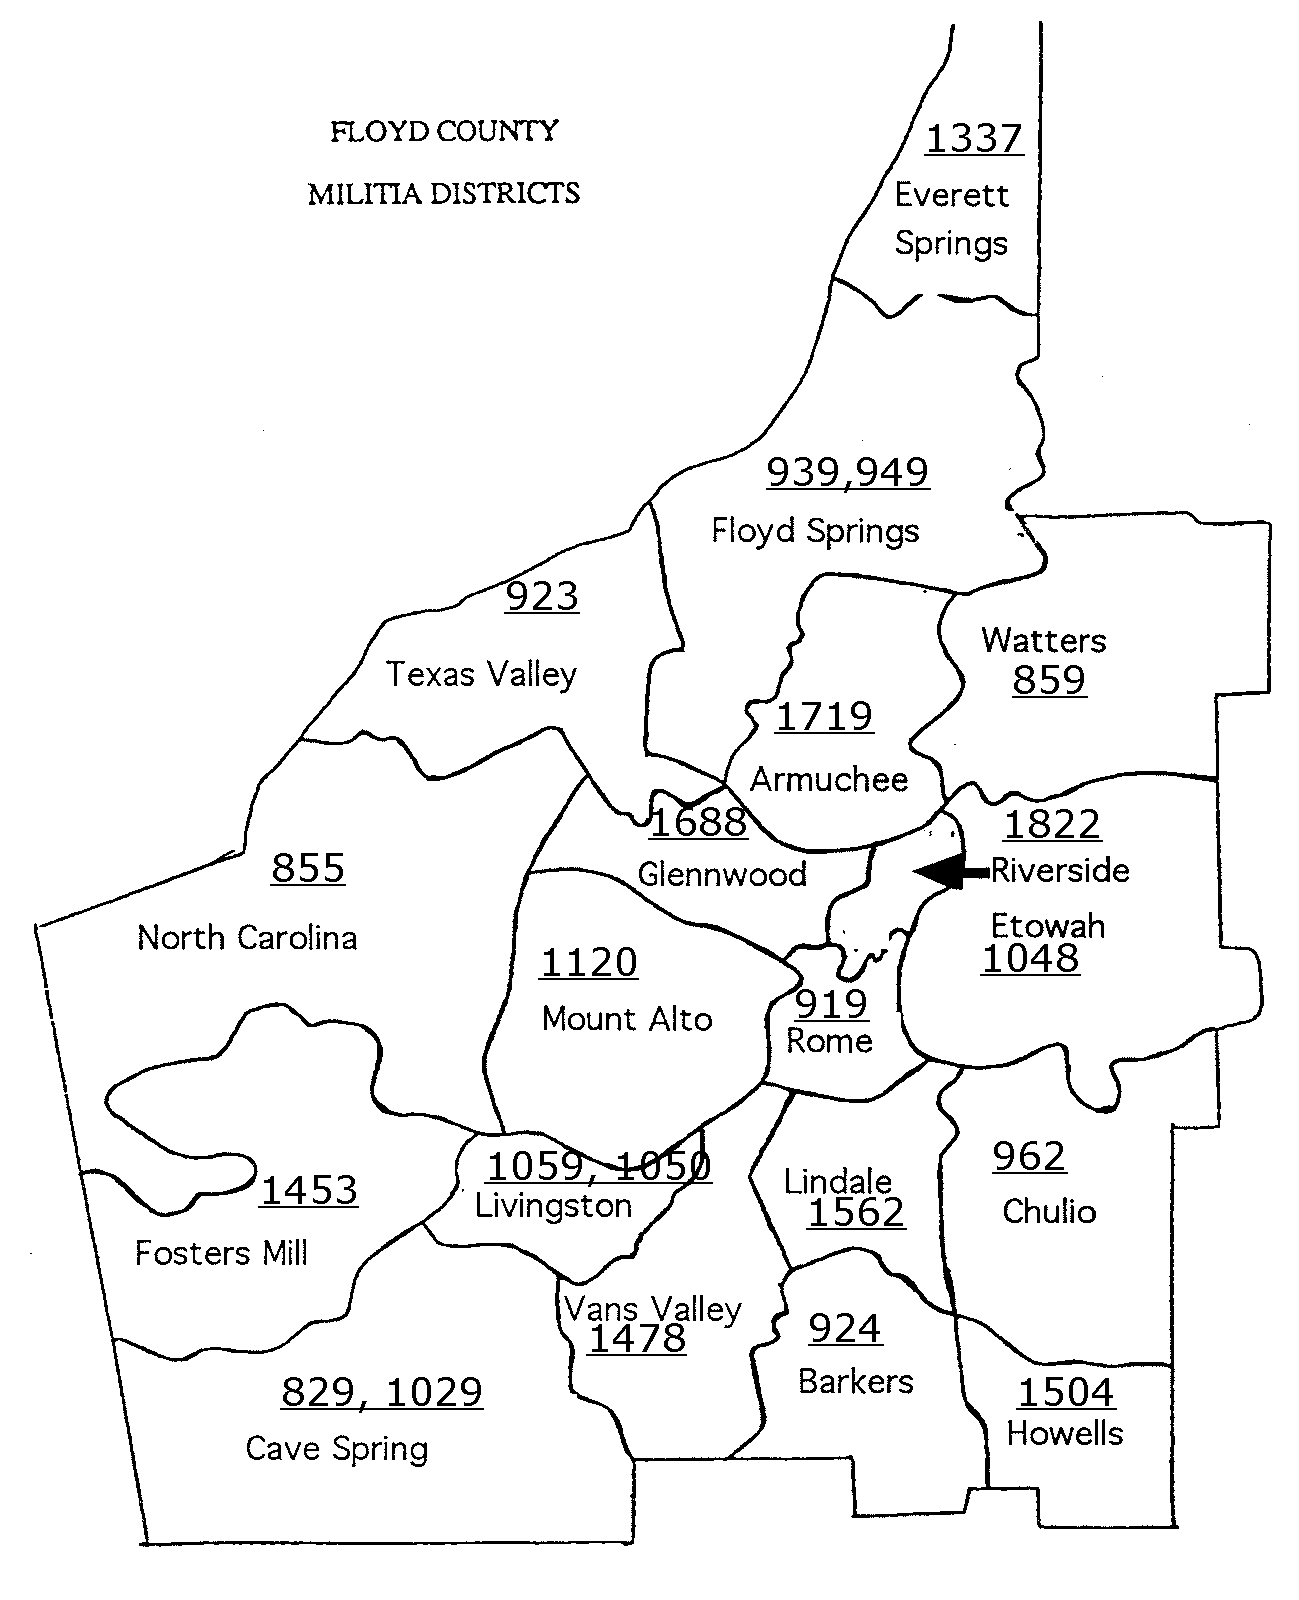 Floyd County Militia Districts. 